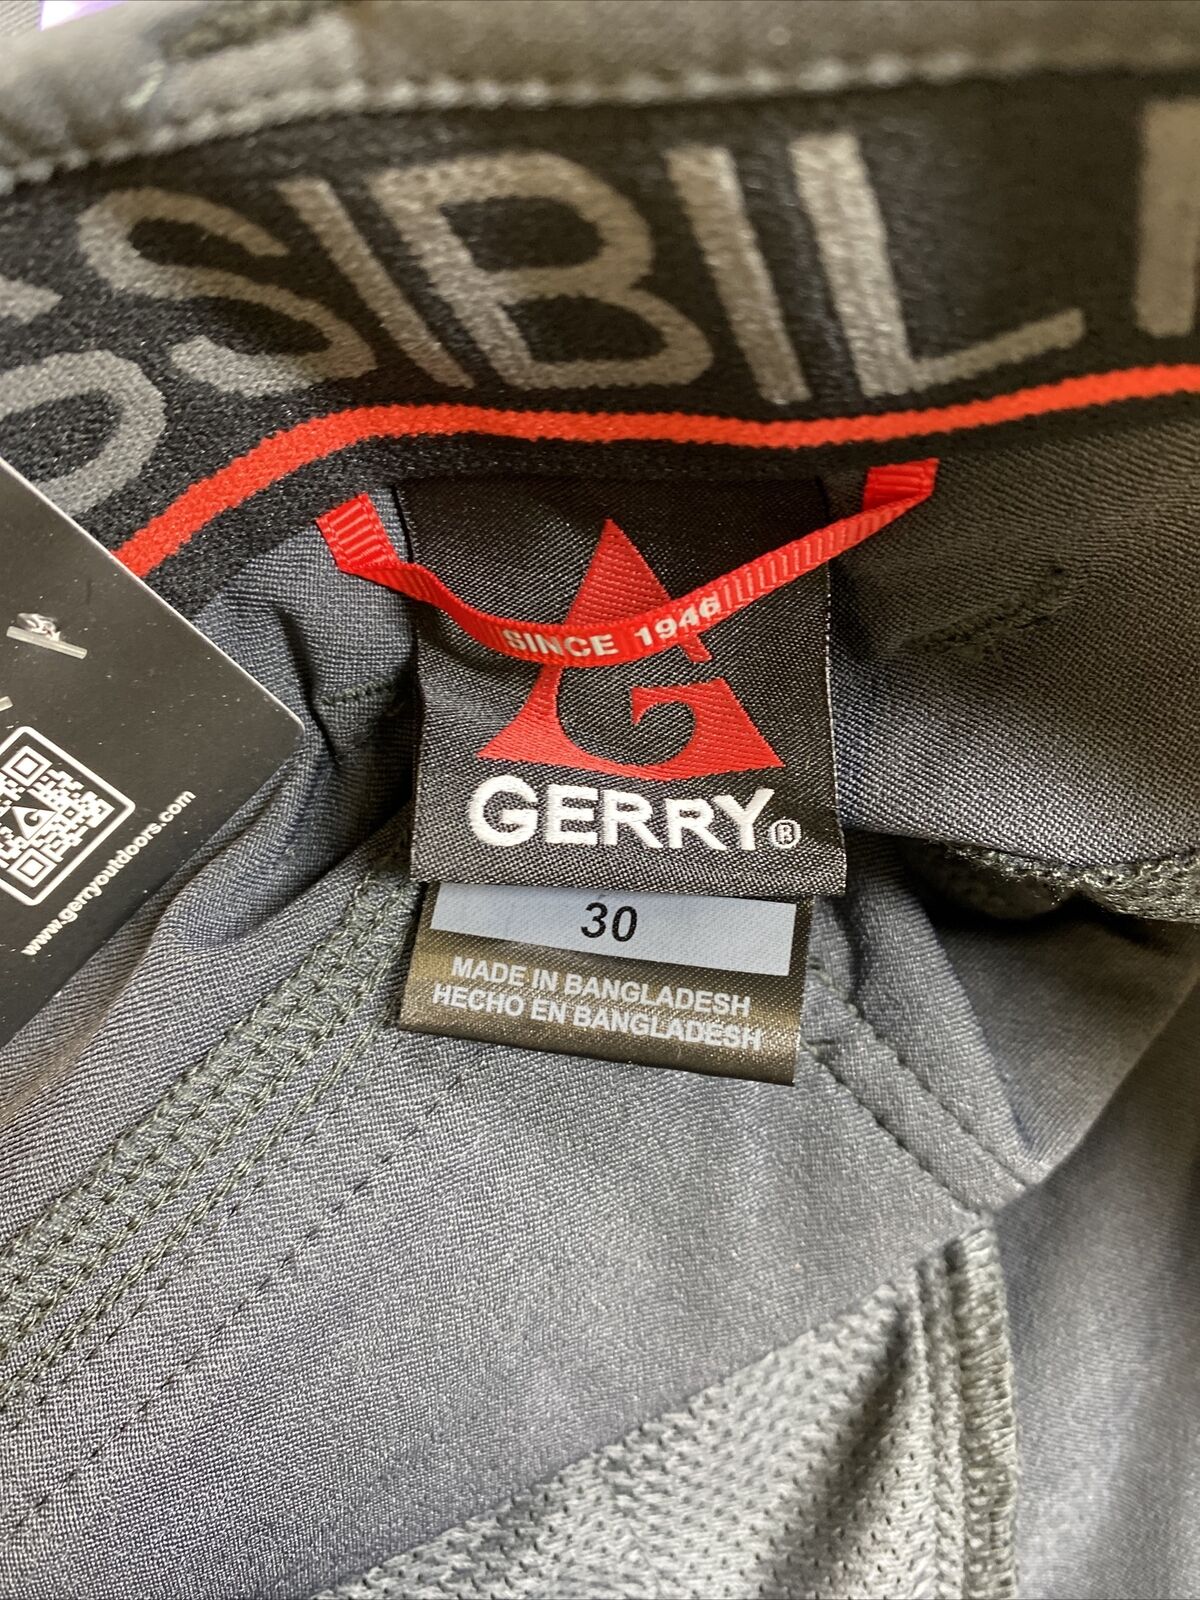 NEW Gerry Men's Gray Venture Hiking 10 in Inseam Shorts - 30